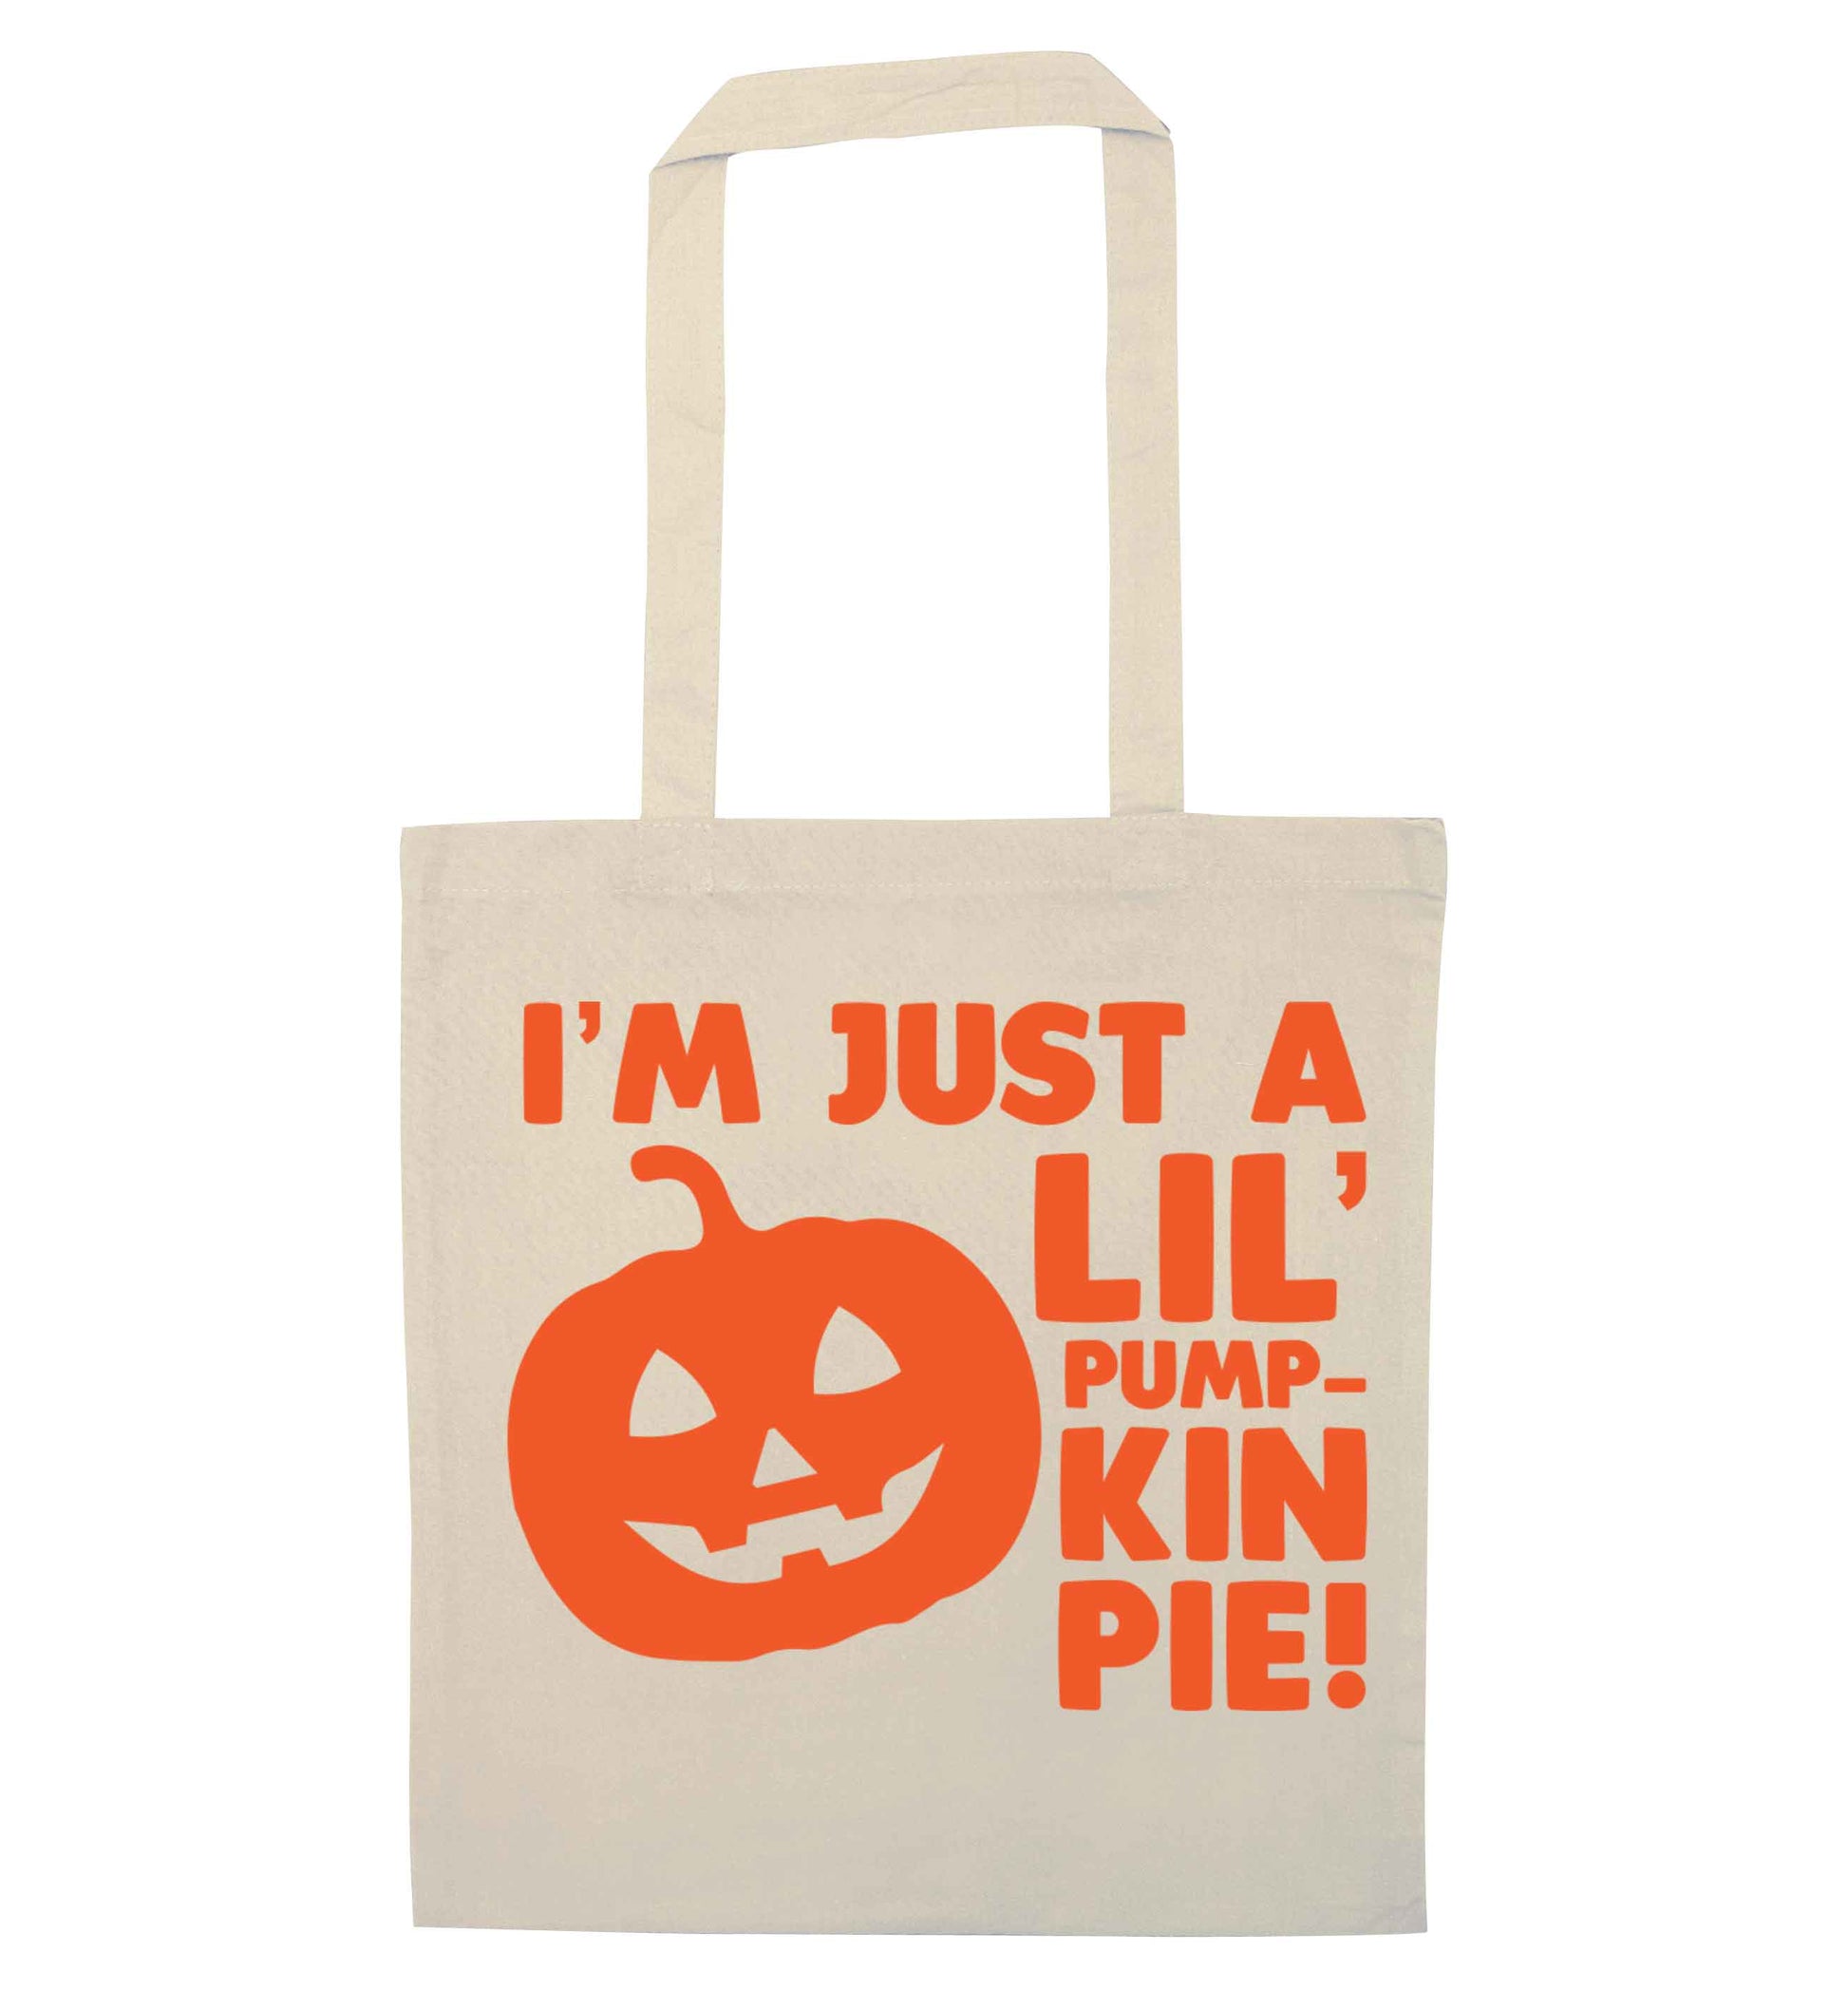 I'm just a lil' pumpkin pie natural tote bag